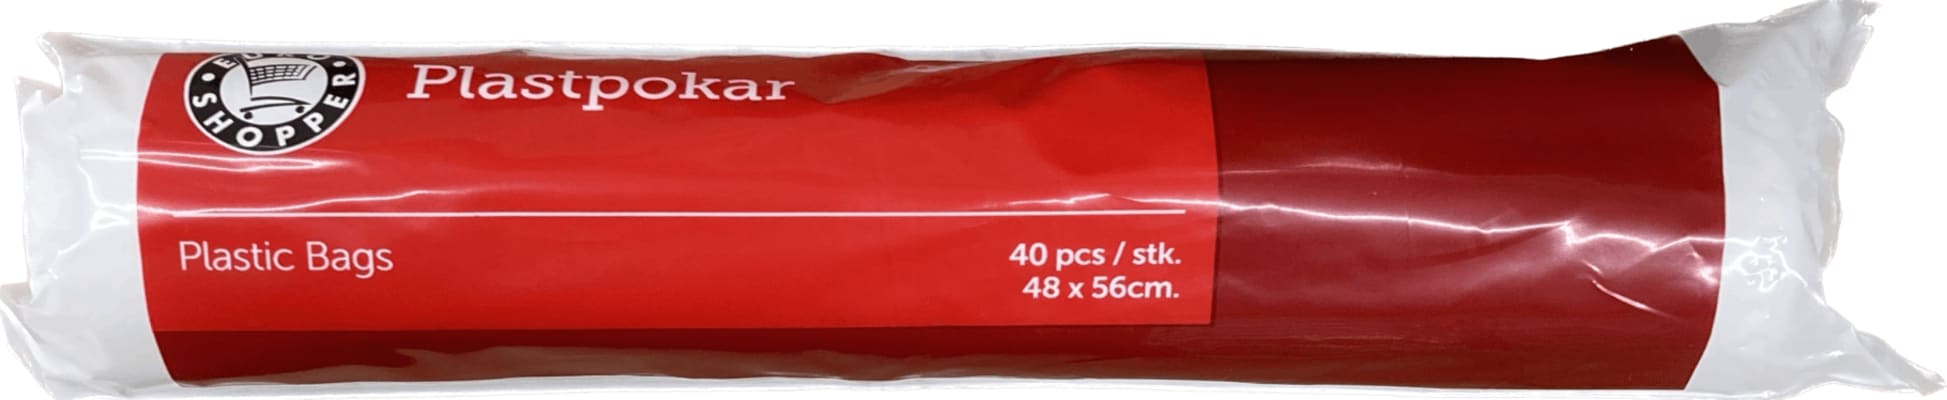 Plastpokar litlir 40 stk